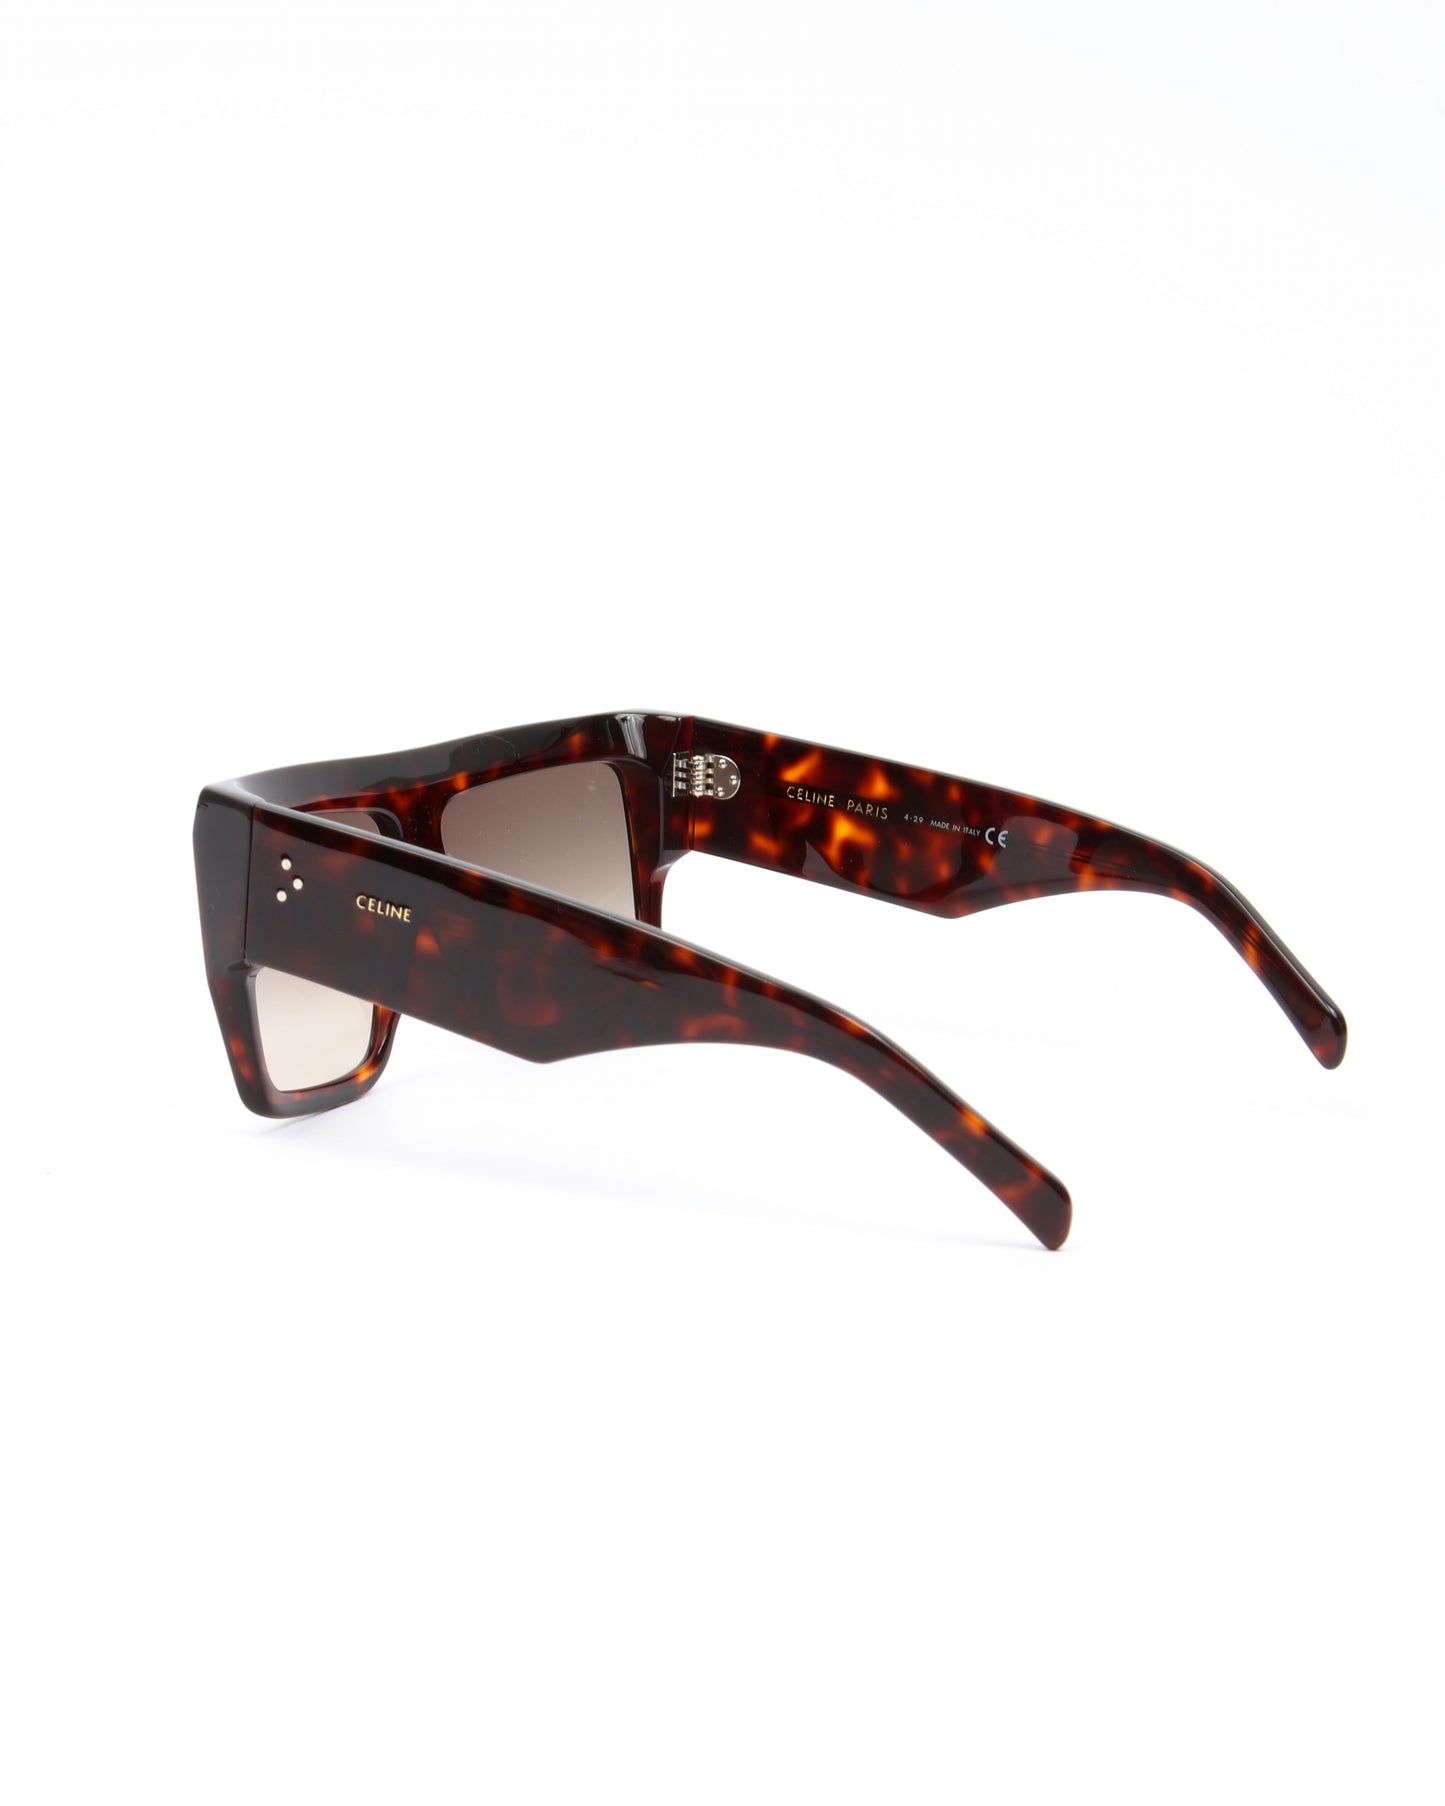 Celine Brown Tortoise Square CL400921 Sunglasses